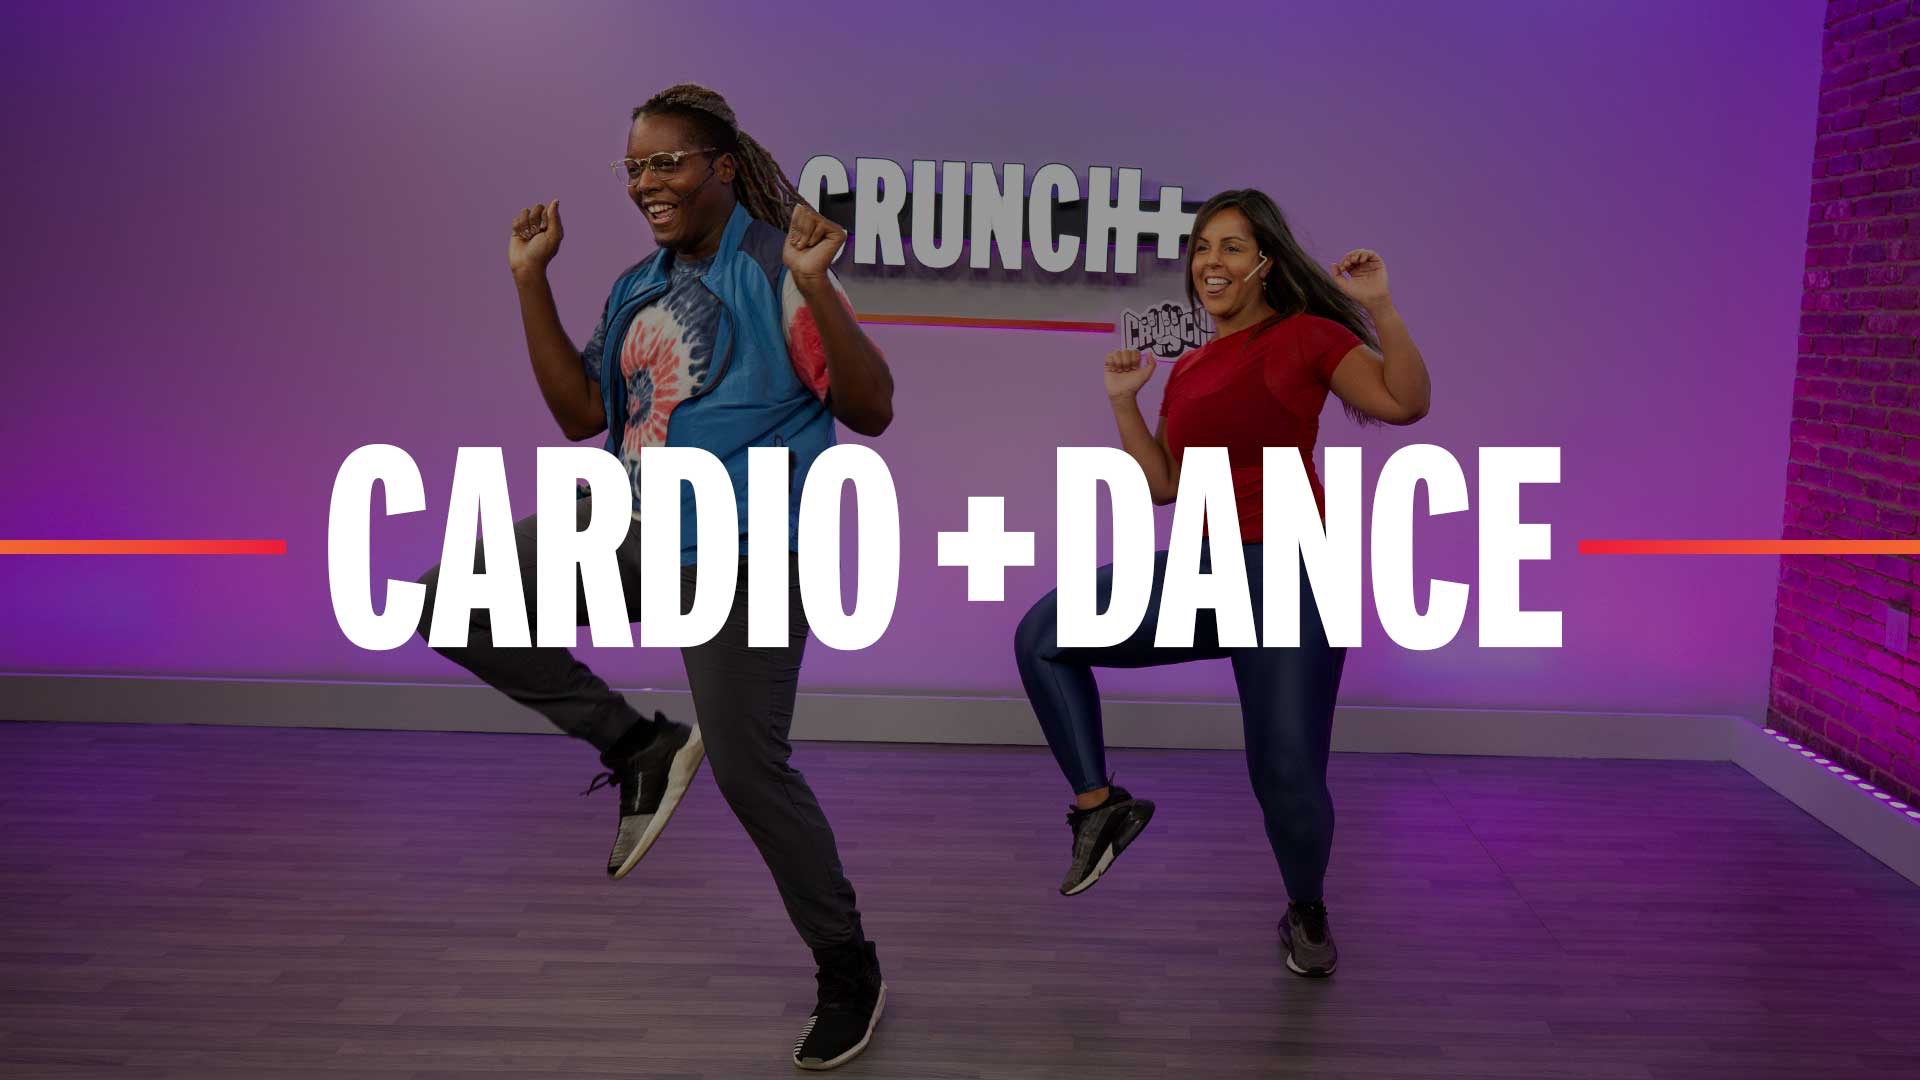 Cardio + Dance by Crunch+